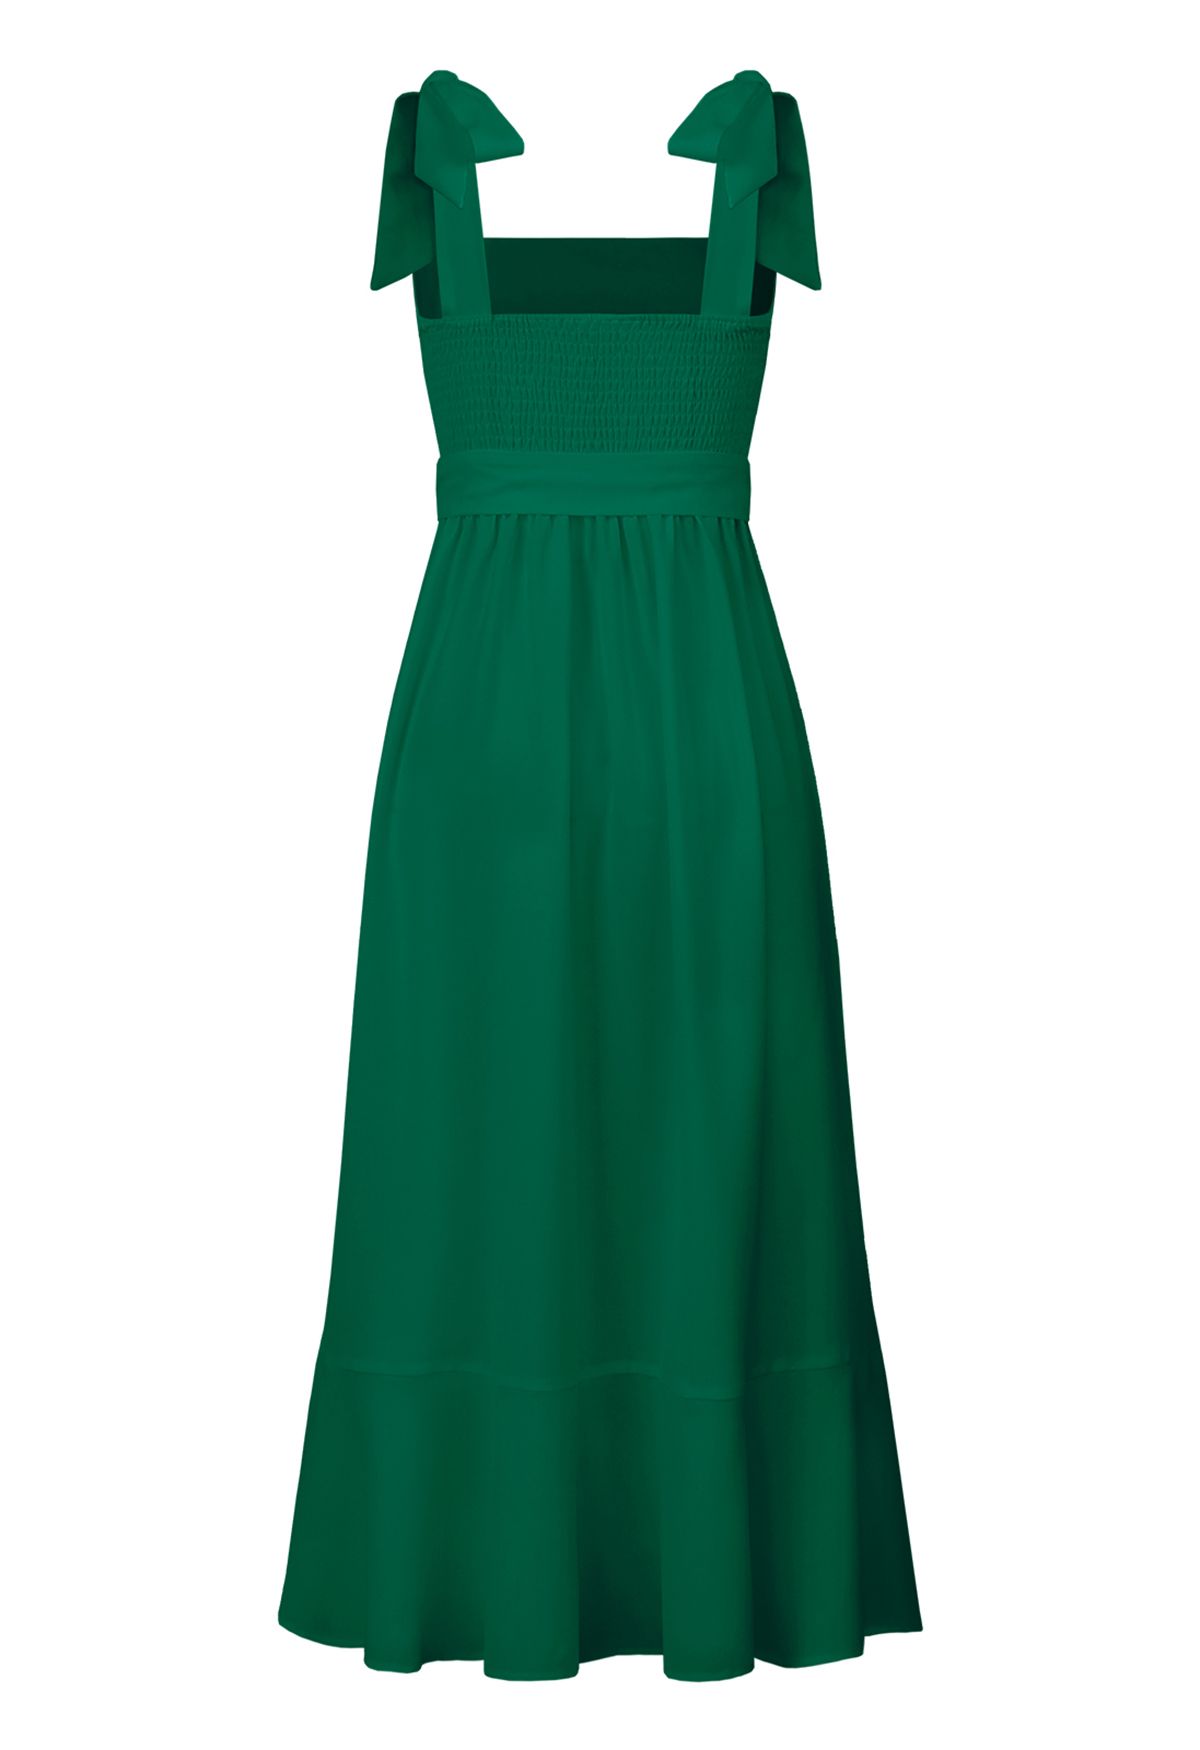 Ruffle Hem Tie-Shoulder Cami Dress in Green - Retro, Indie and Unique ...